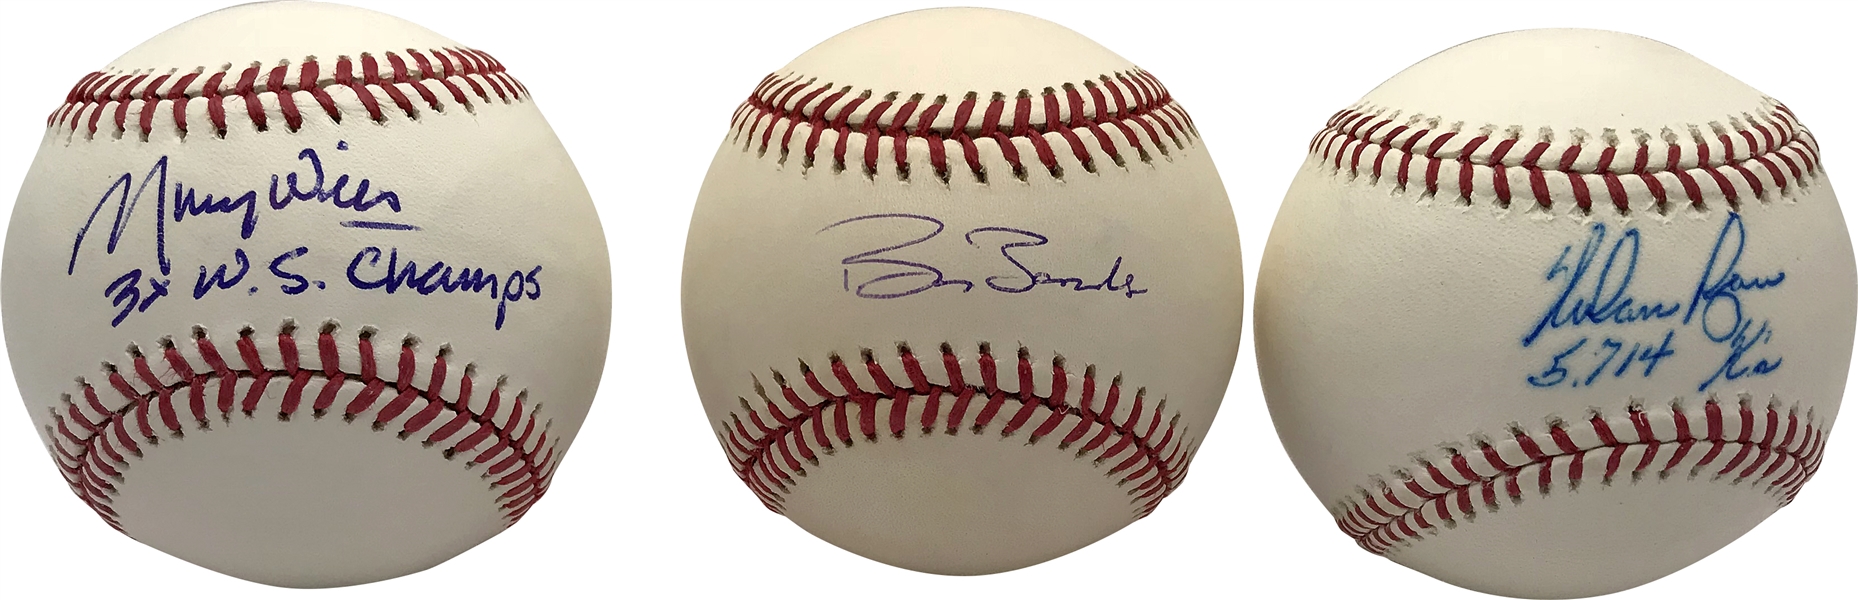 MLB Stars Lot of Six (6) Single Signed OML Baseballs w/ Ryan, Bonds & Others! (Beckett/BAS Guaranteed)